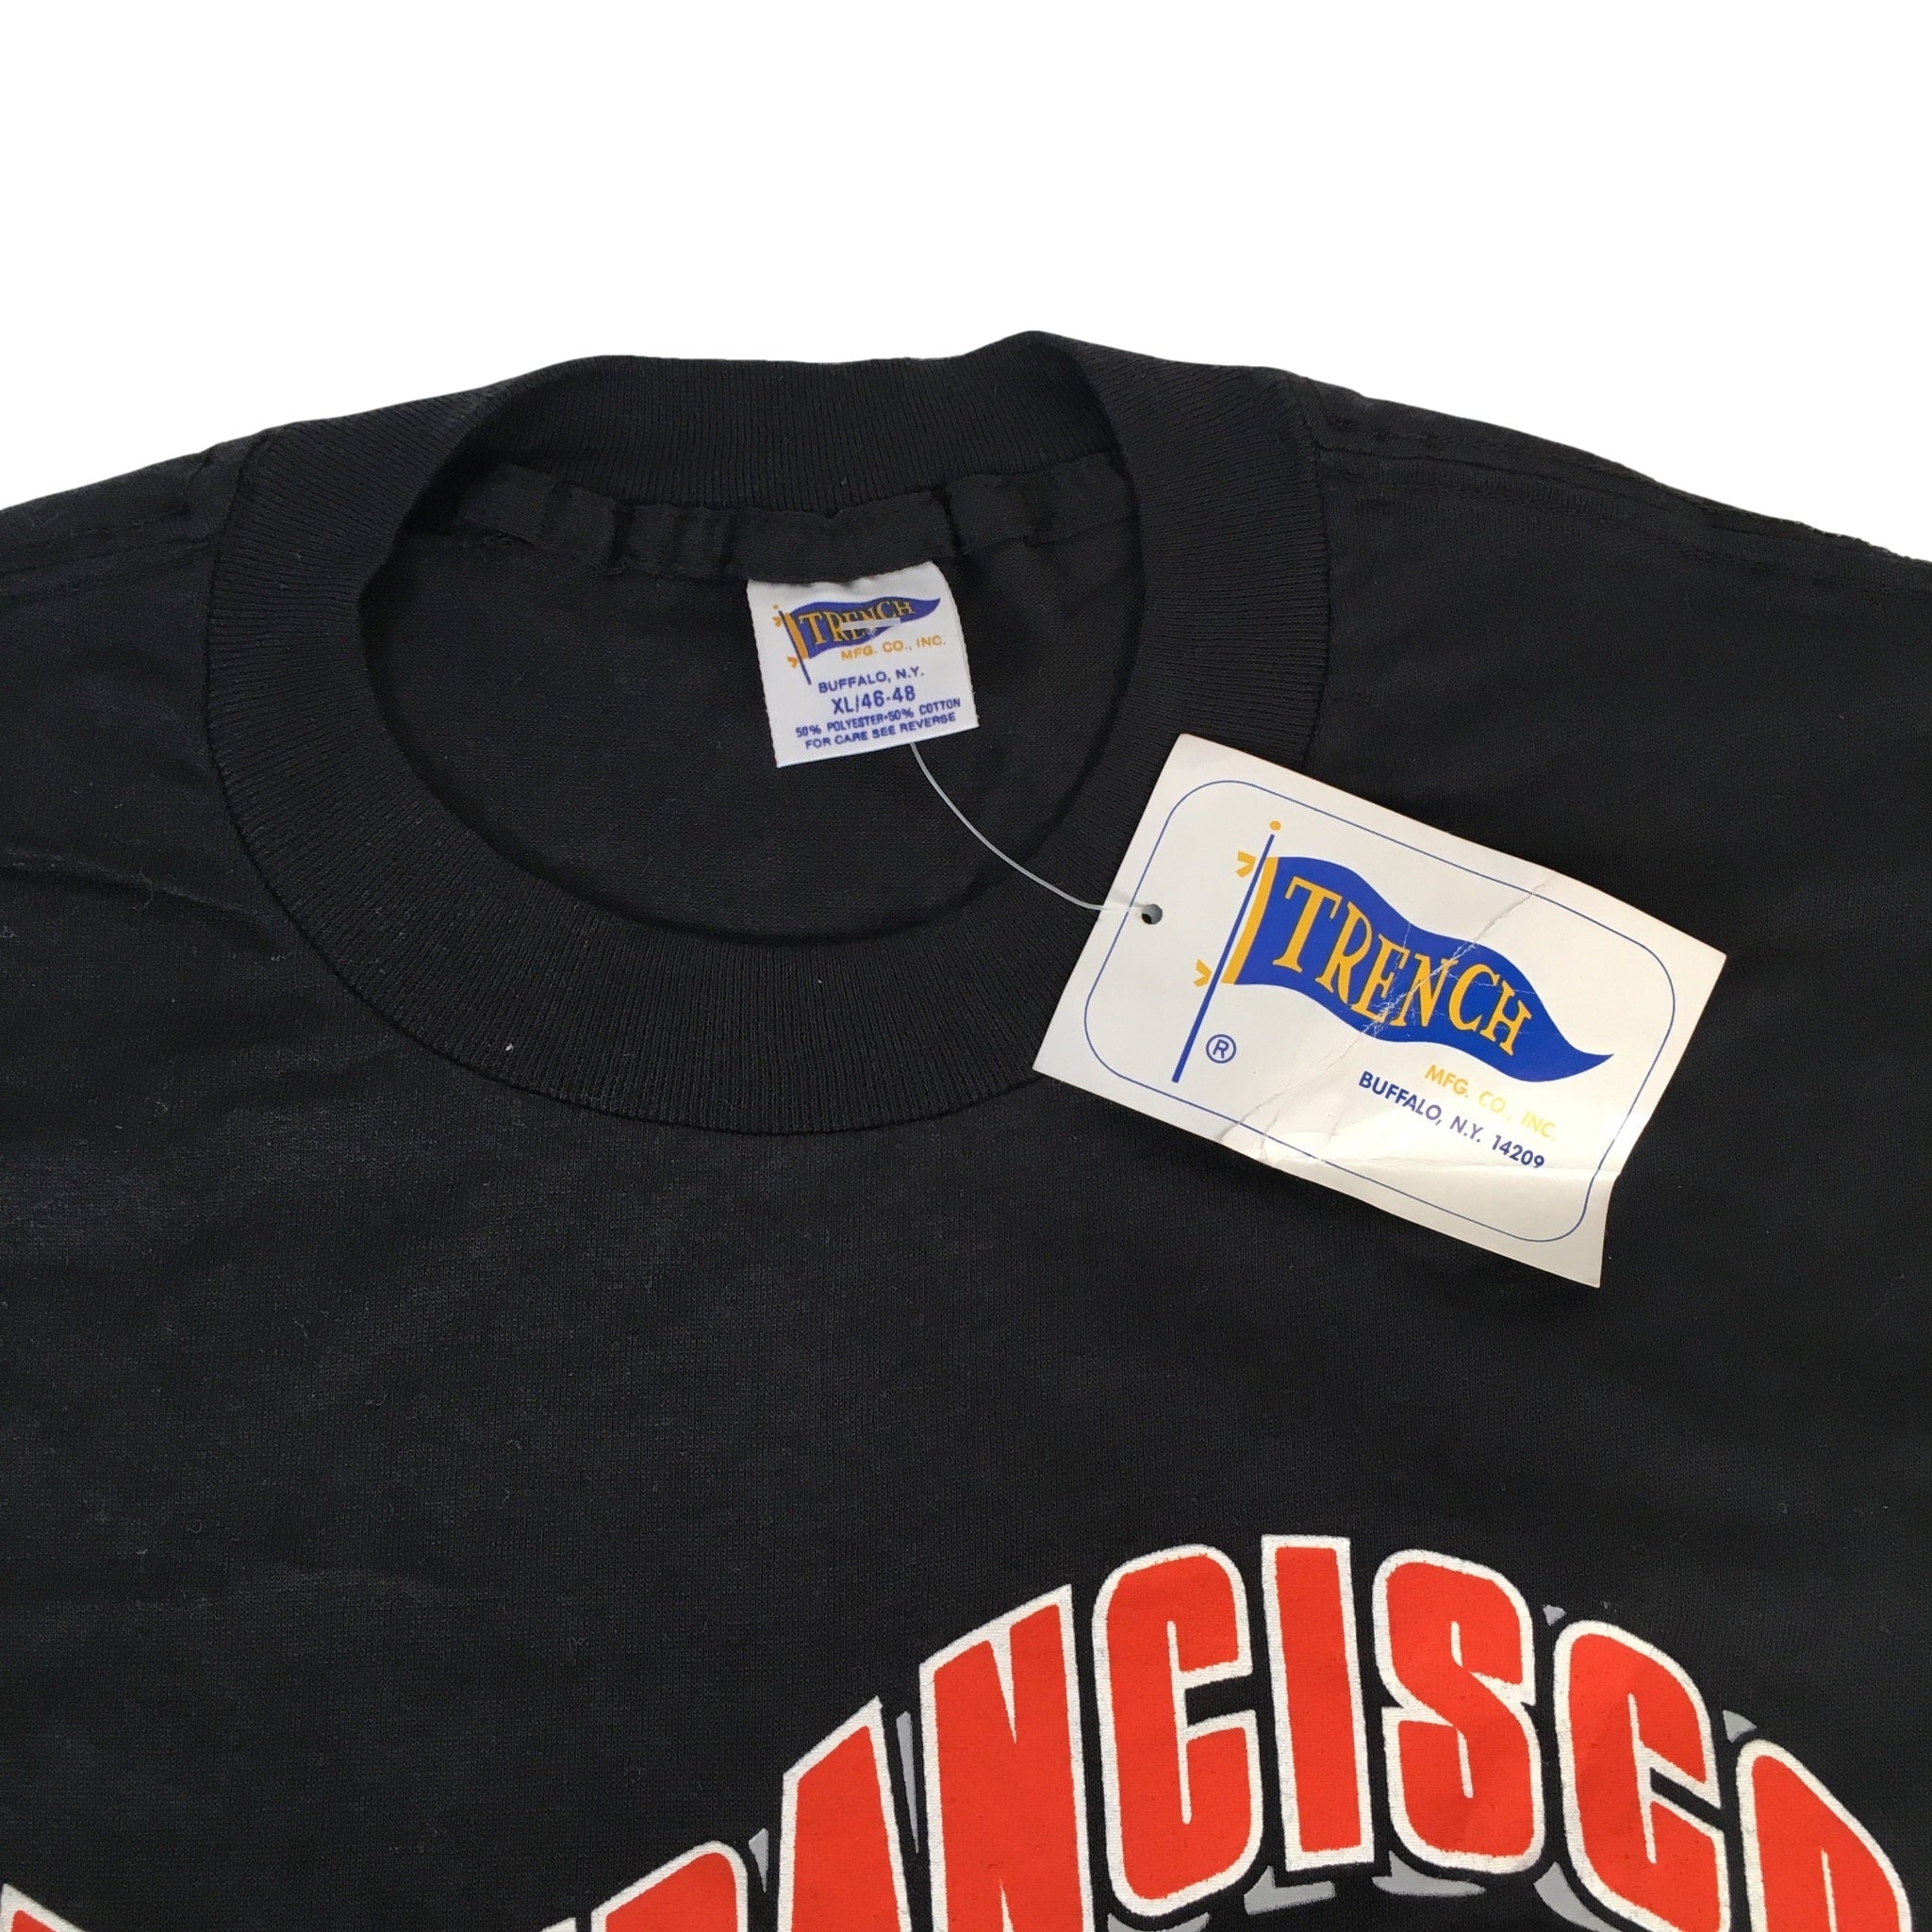 Vintage San Francisco Giants T-Shirt